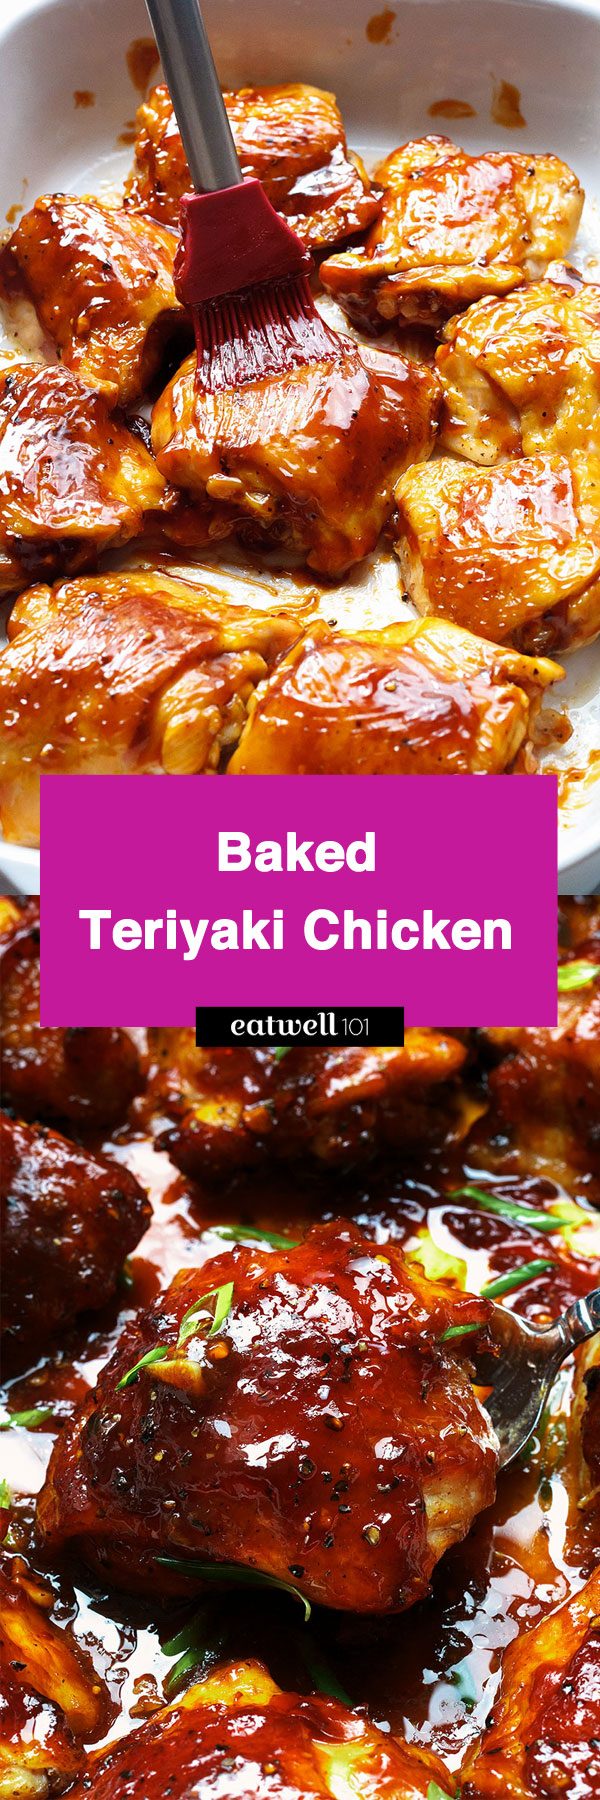 Baked Teriyaki Chicken - #eatwell101 #recipe #chicken #oven #teriyaki - An easy chicken dinner baked in the oven with a sticky homemade teriyaki sauce.